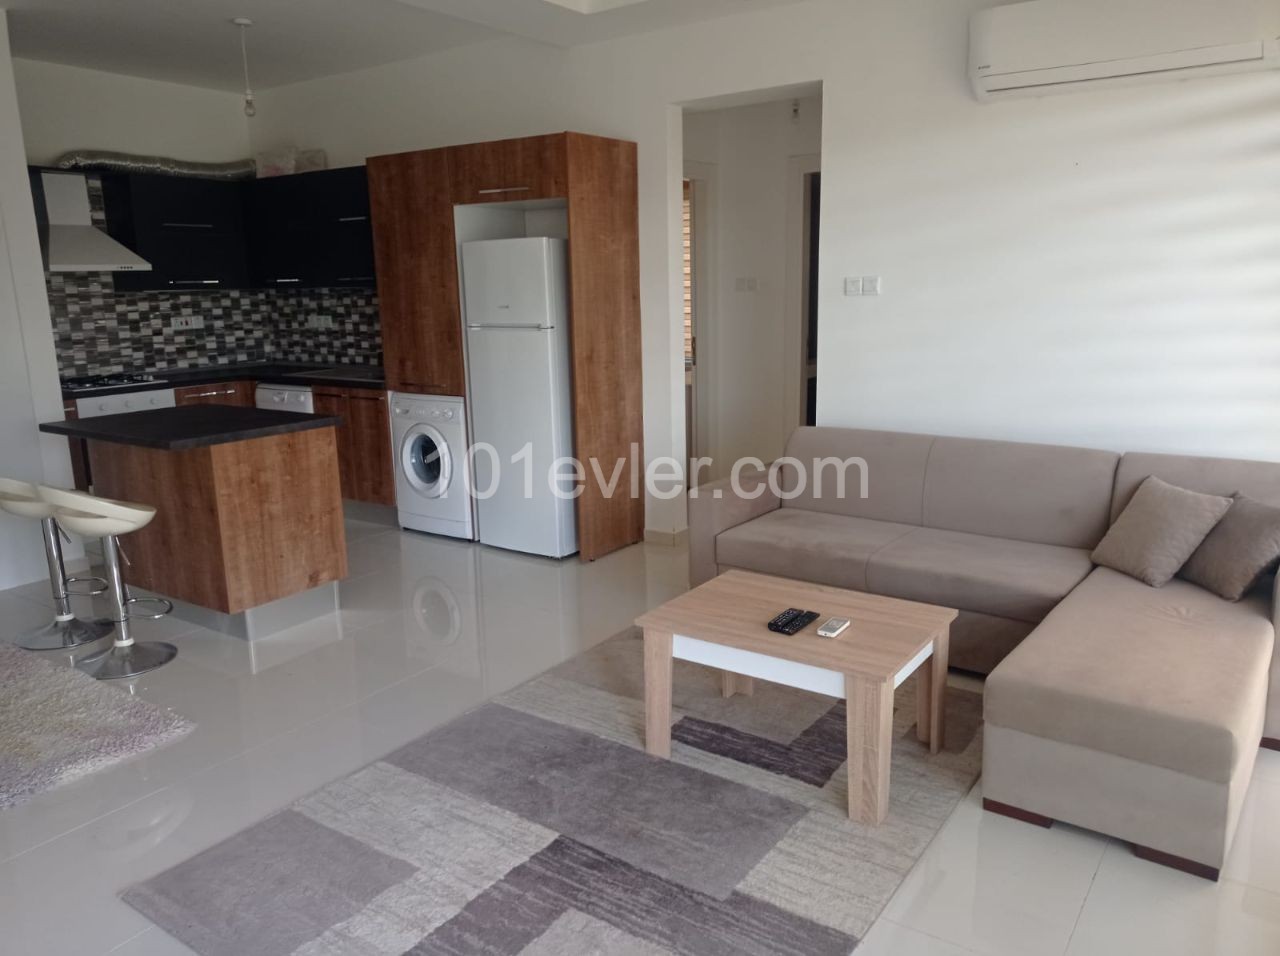 2+1 furnished modern flat for rent in Dereboyun ** 